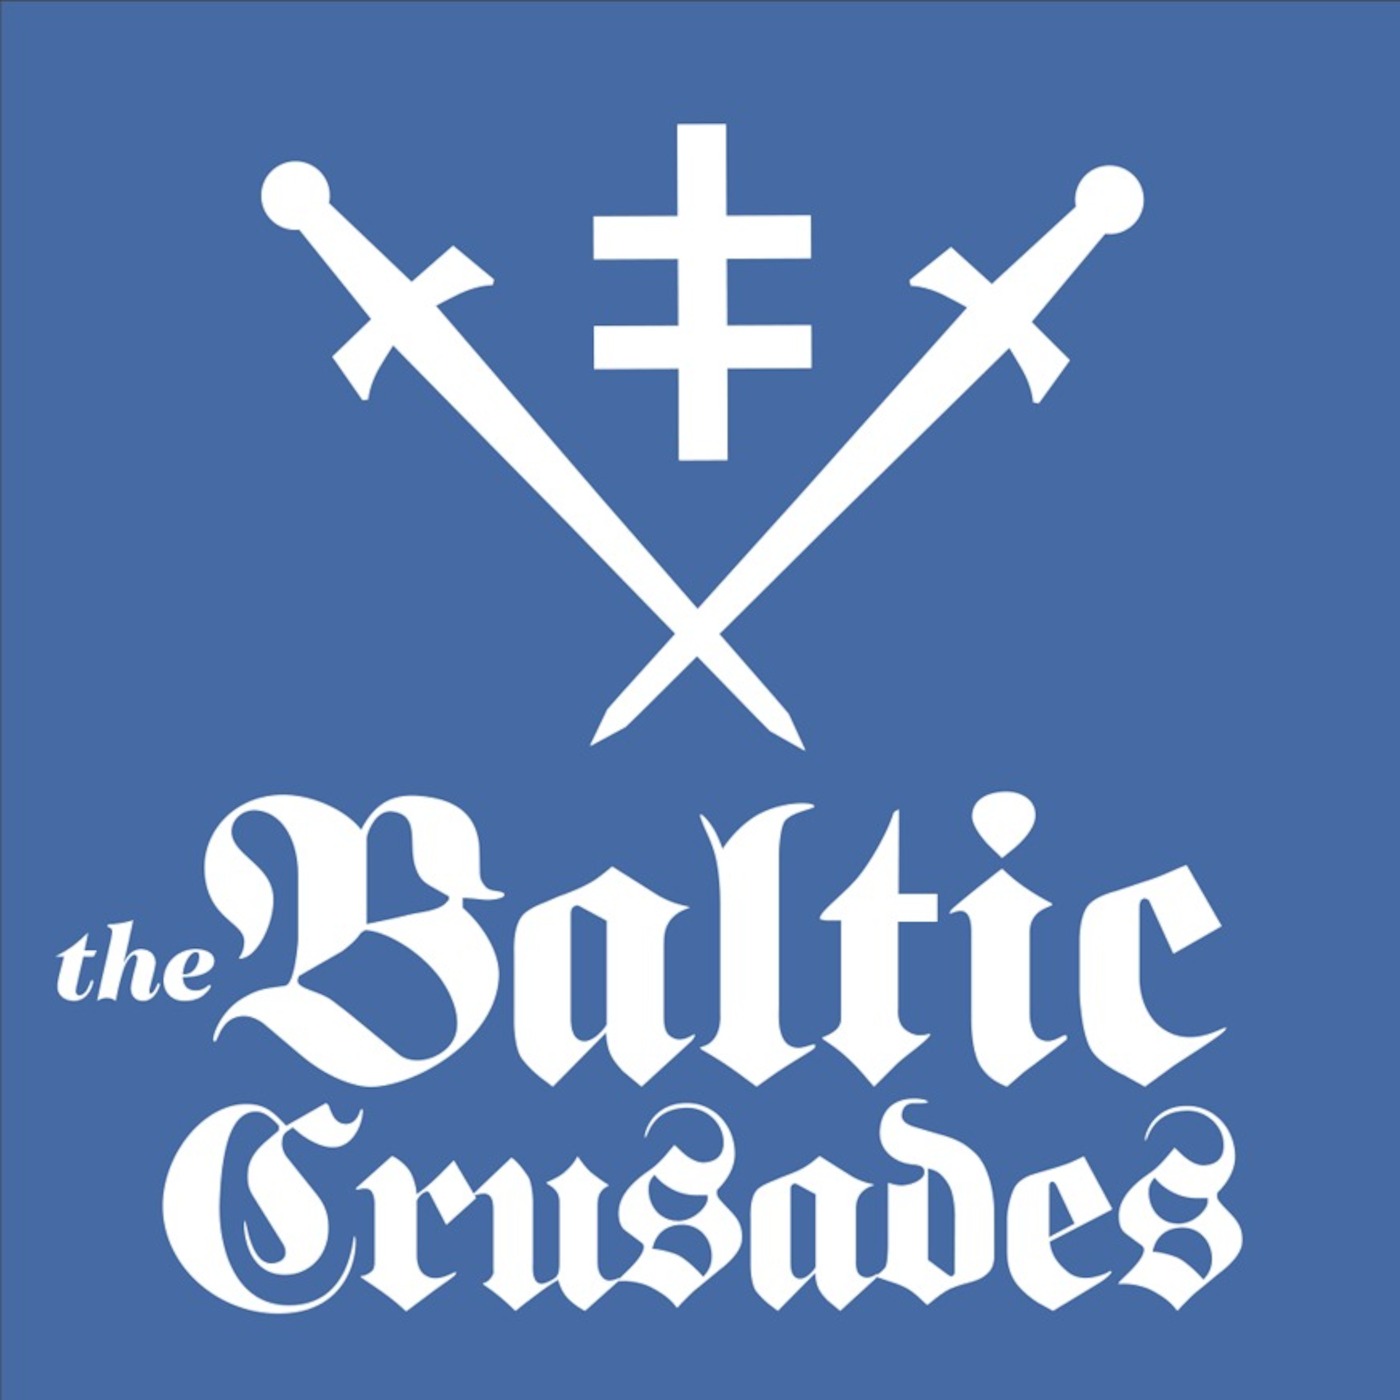 Episode 237 - The Baltic Crusades